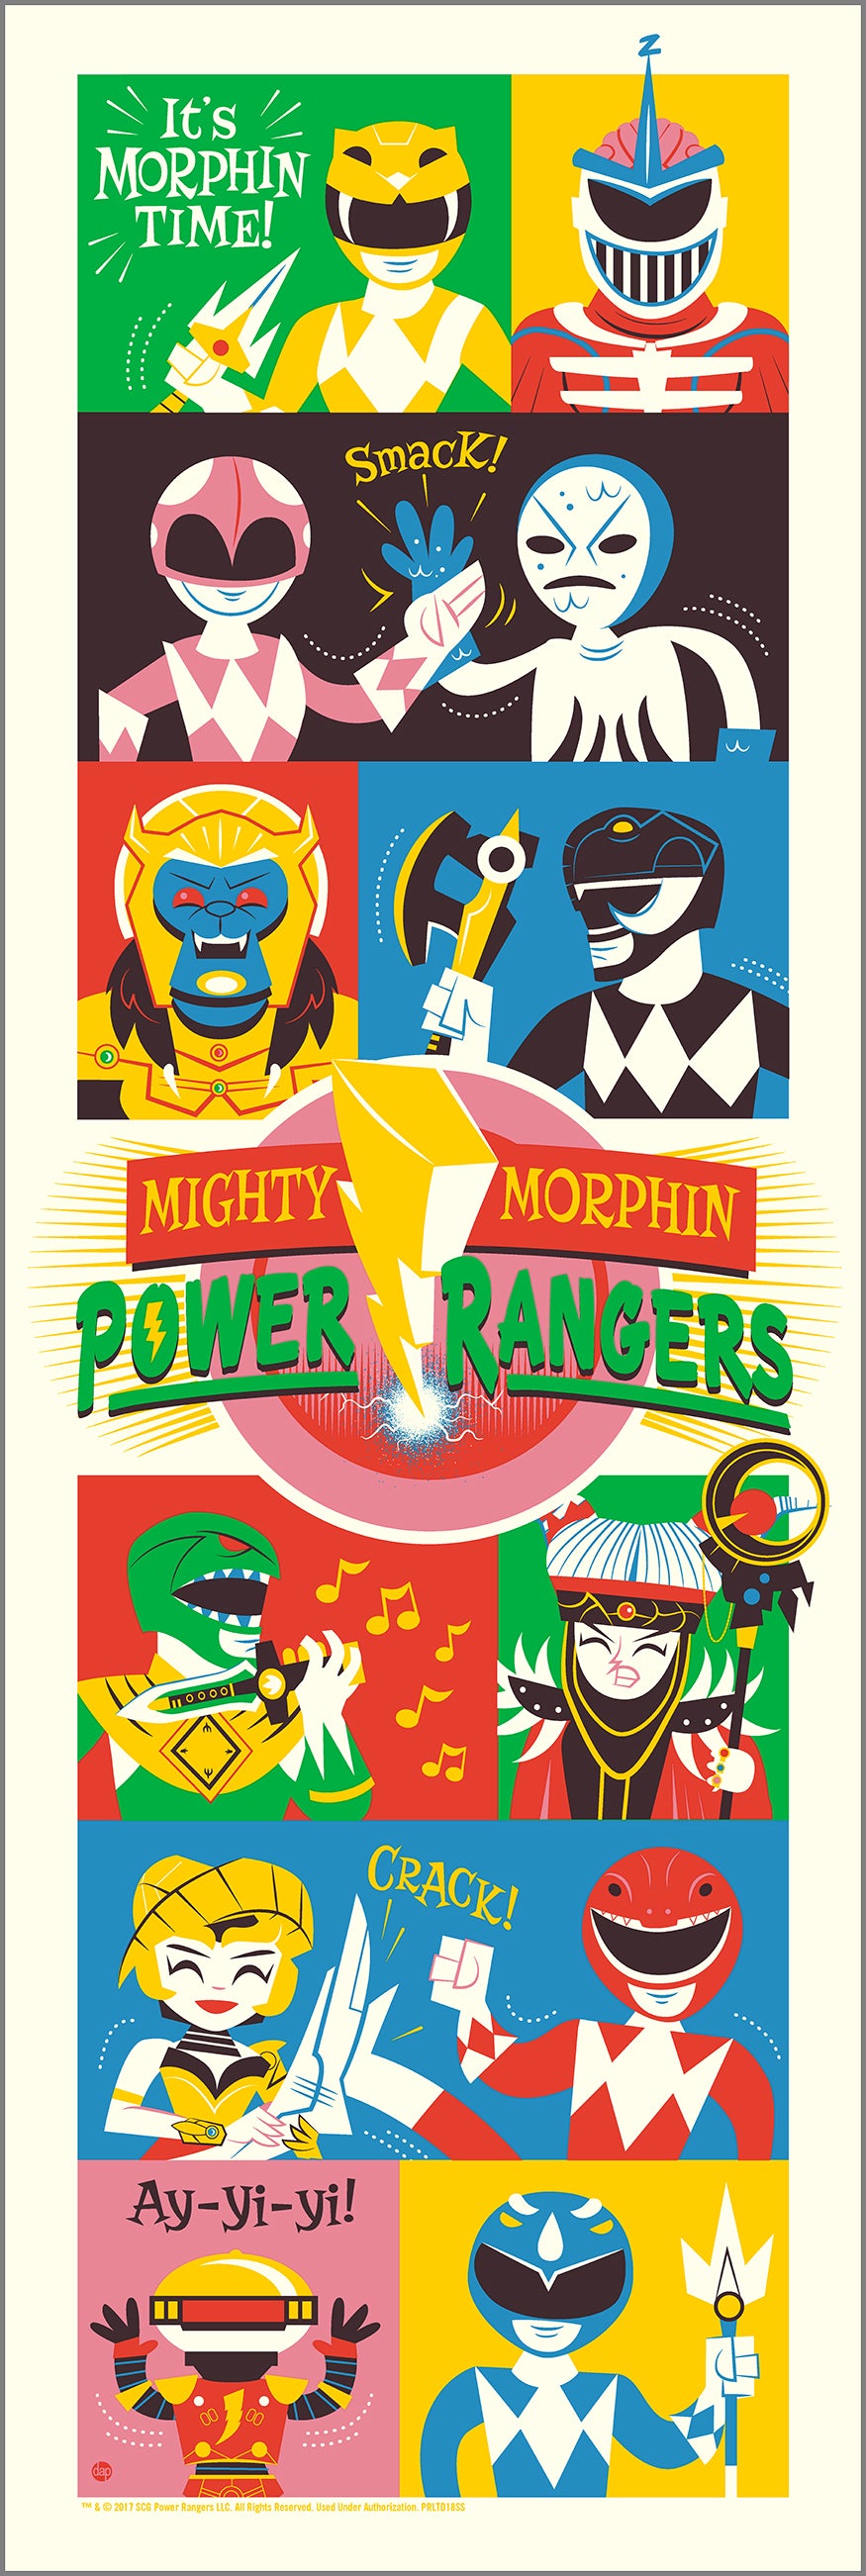 Dave Perillo "Mighty Morphin Power Rangers"